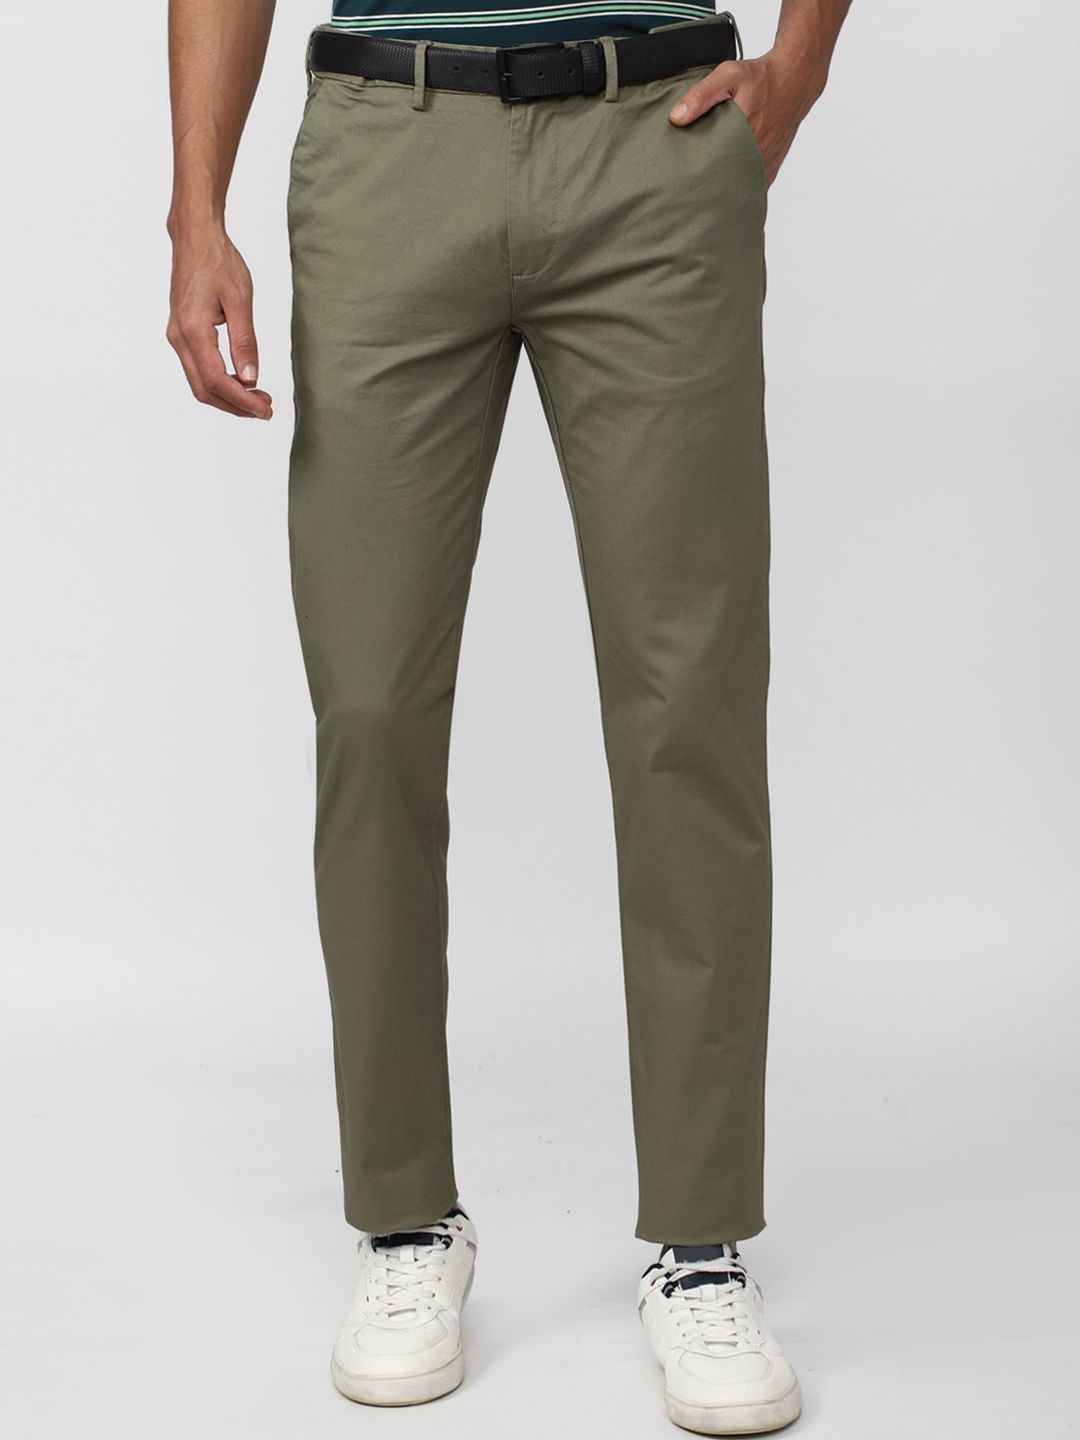 Buy Peter England Mens Slim Fit Cotton Formal Trousers on Amazon   PaisaWapascom